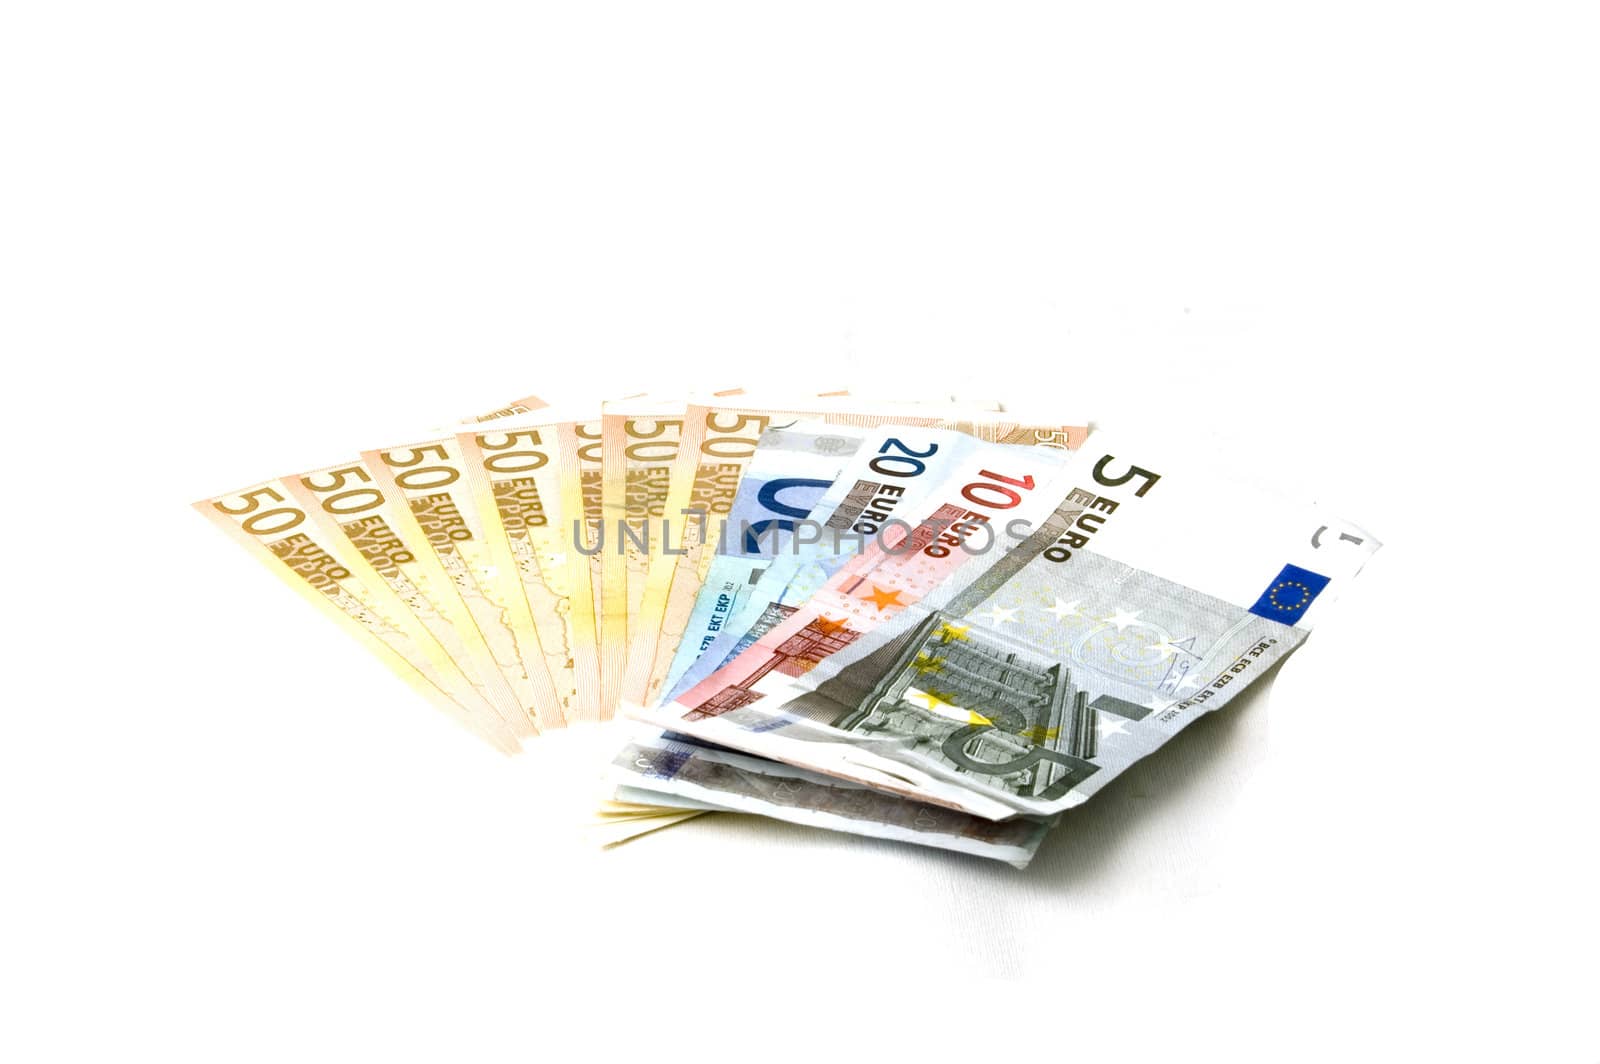 Euro banknotes money

